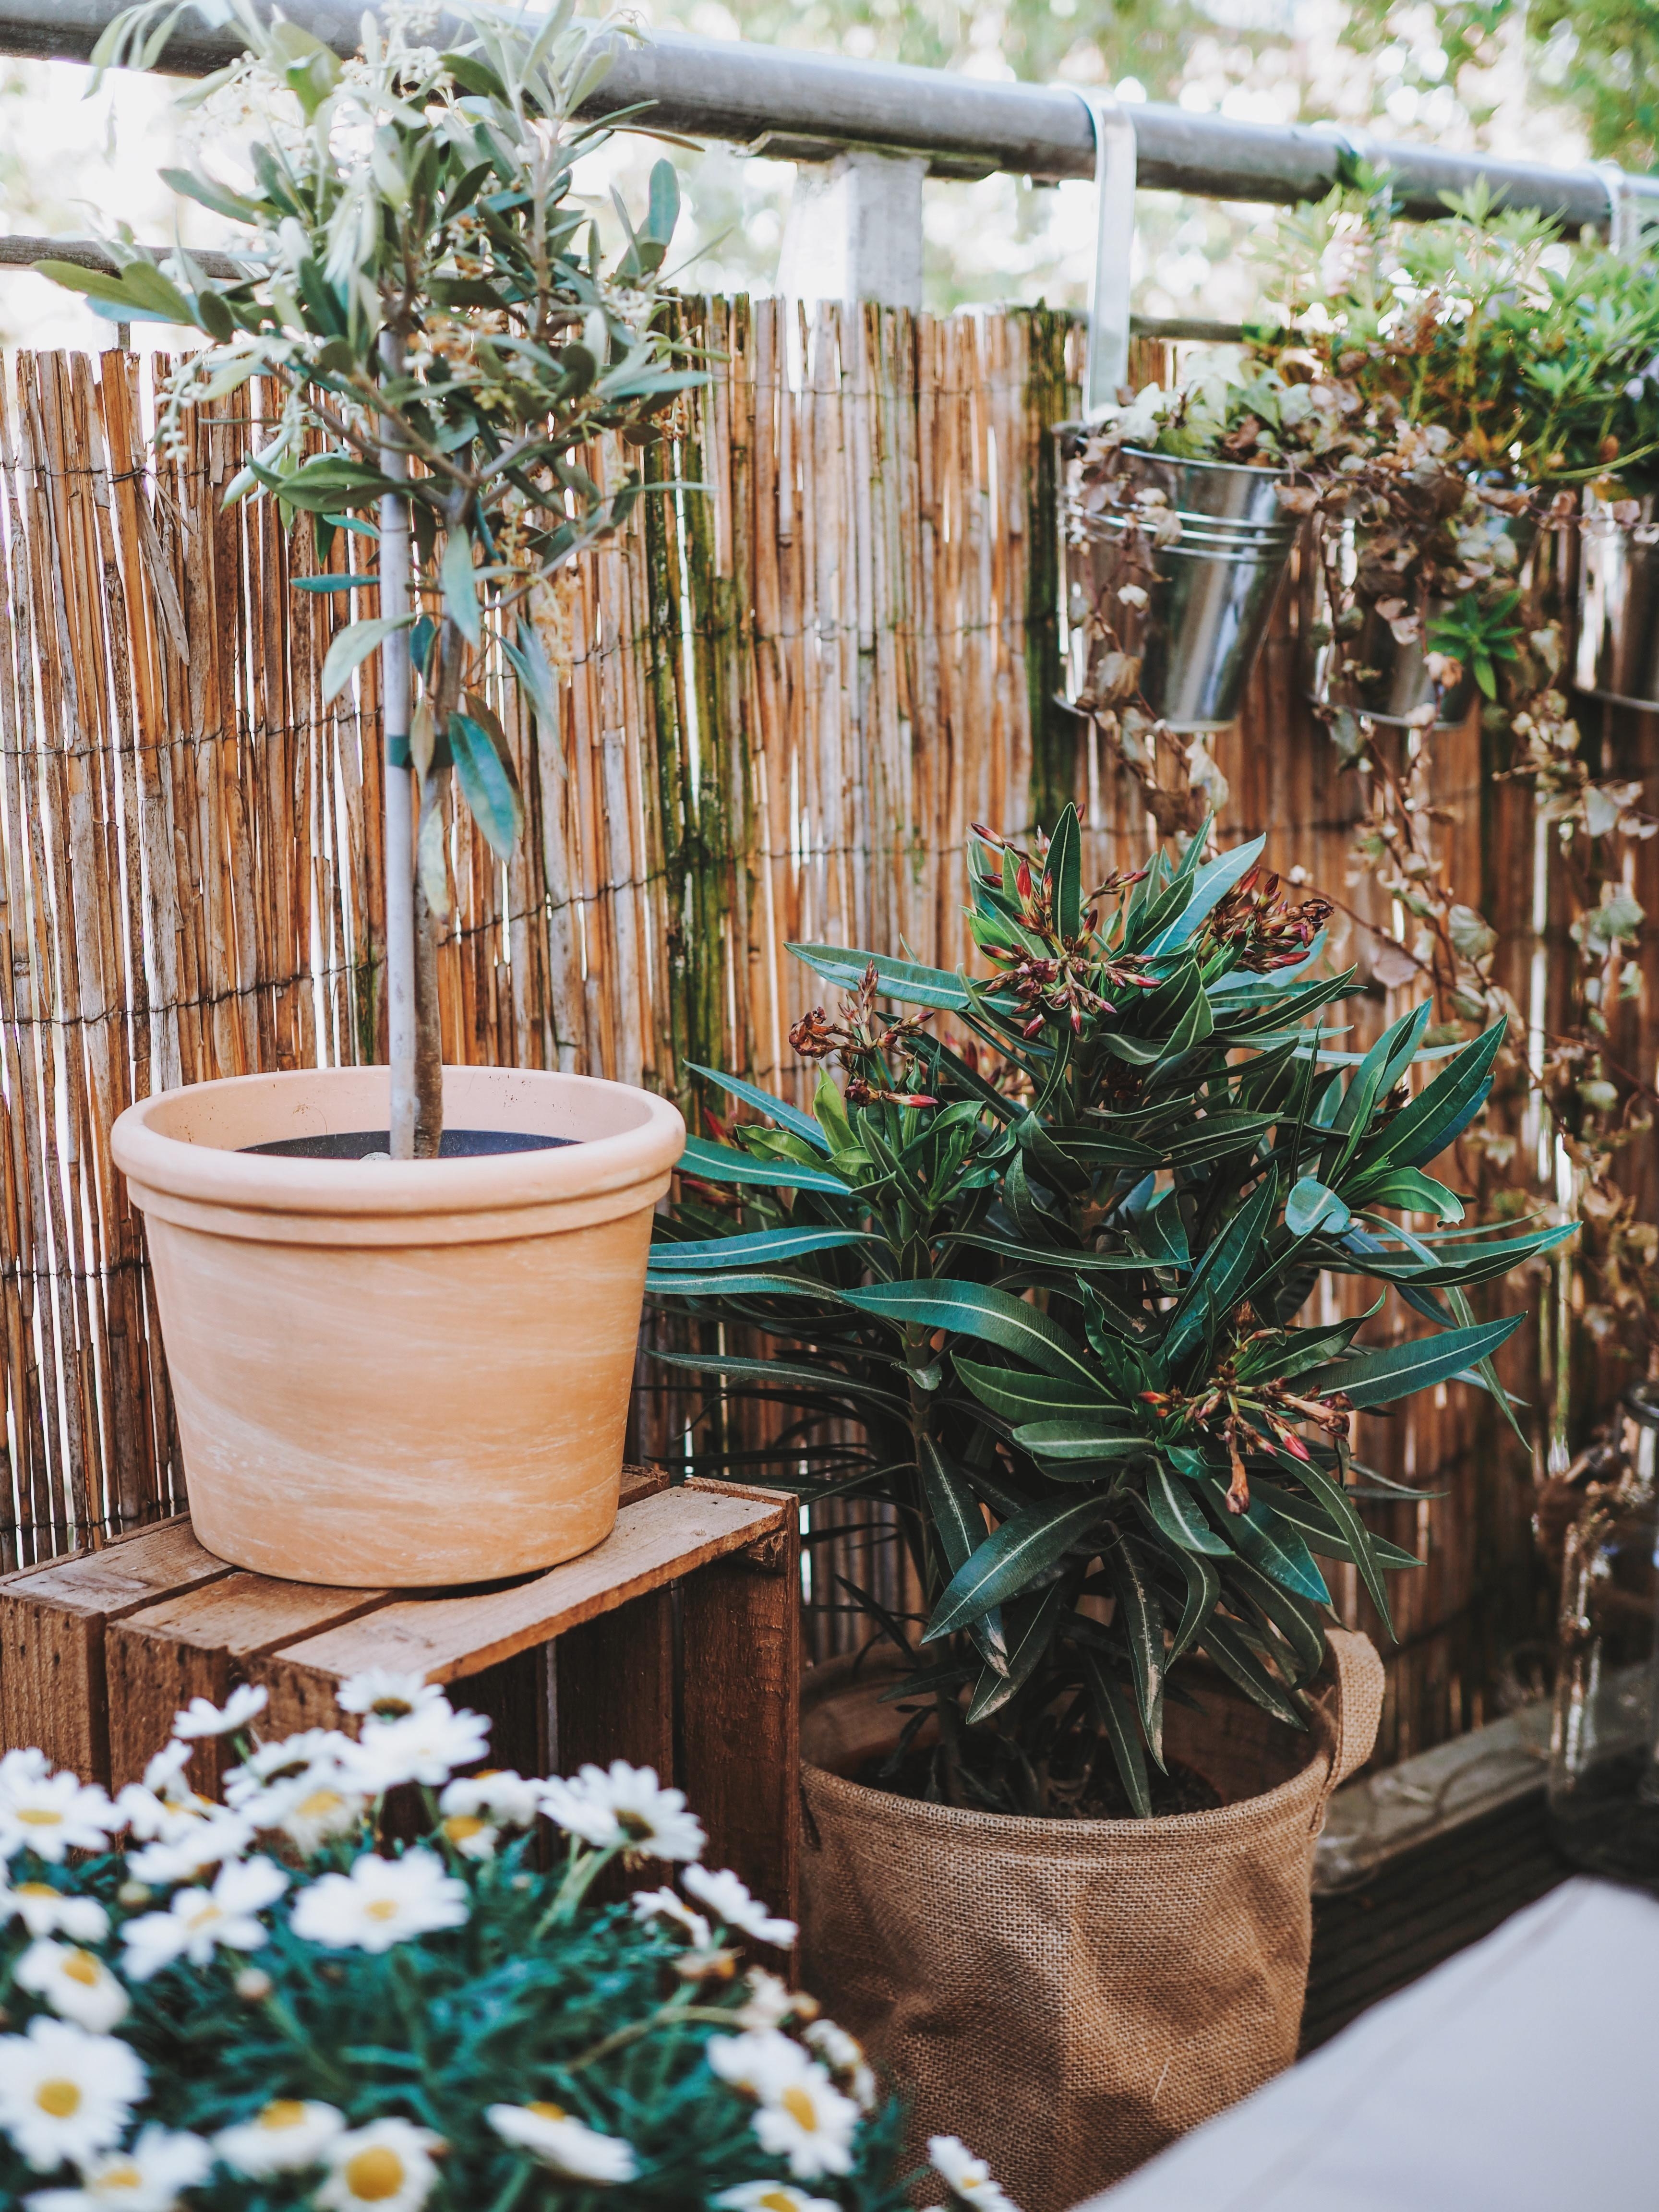 Oleander 🌸
#balkon #couchstyle #balkonideen #outdoor #pflanzen #balkonpflanzen